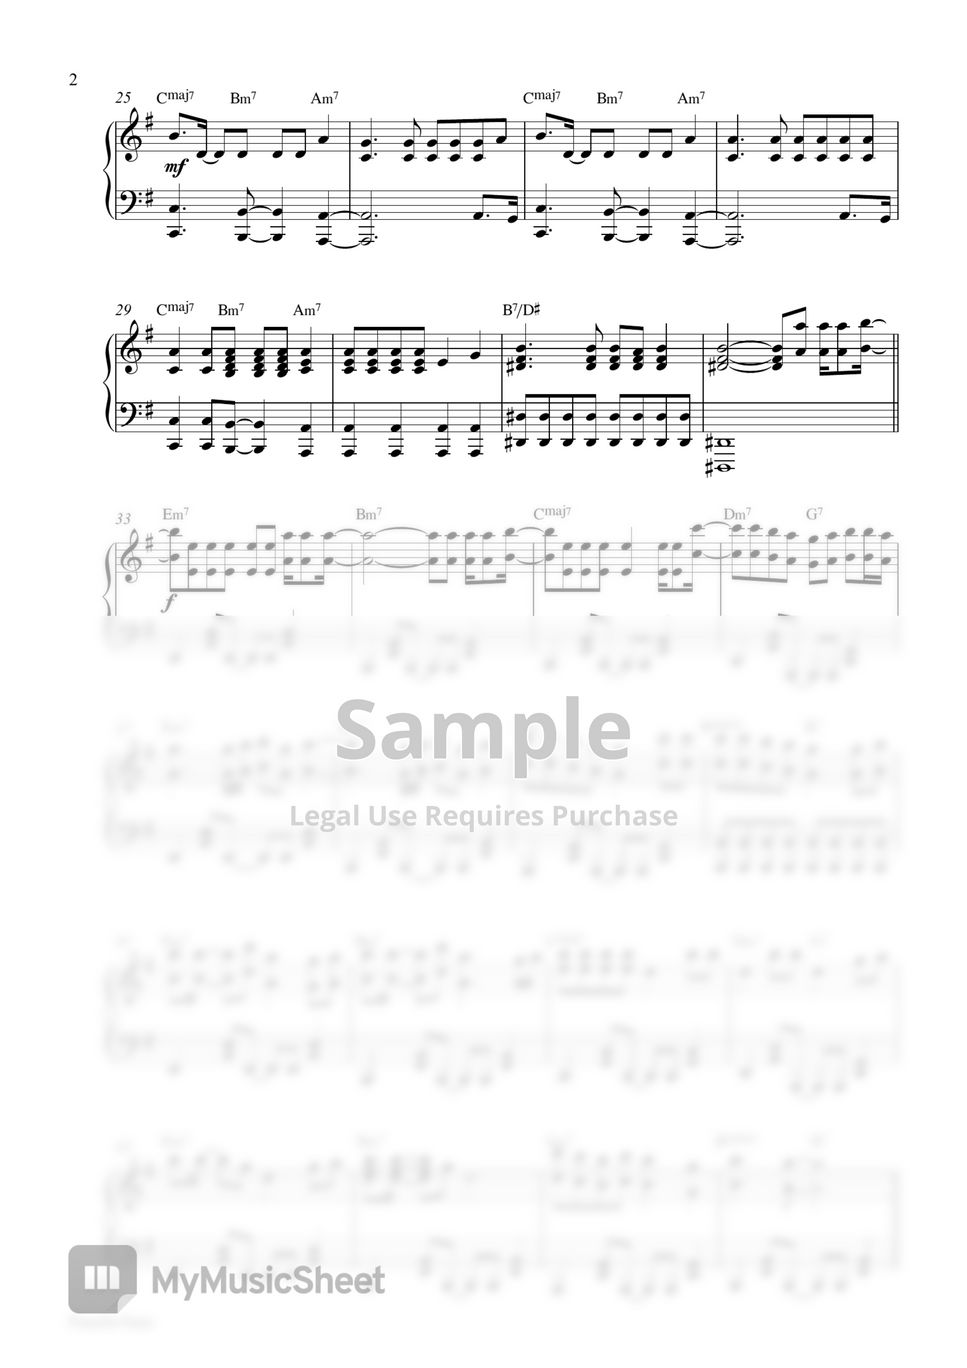 TWICE - TT (Piano Sheet) by Pianella Piano